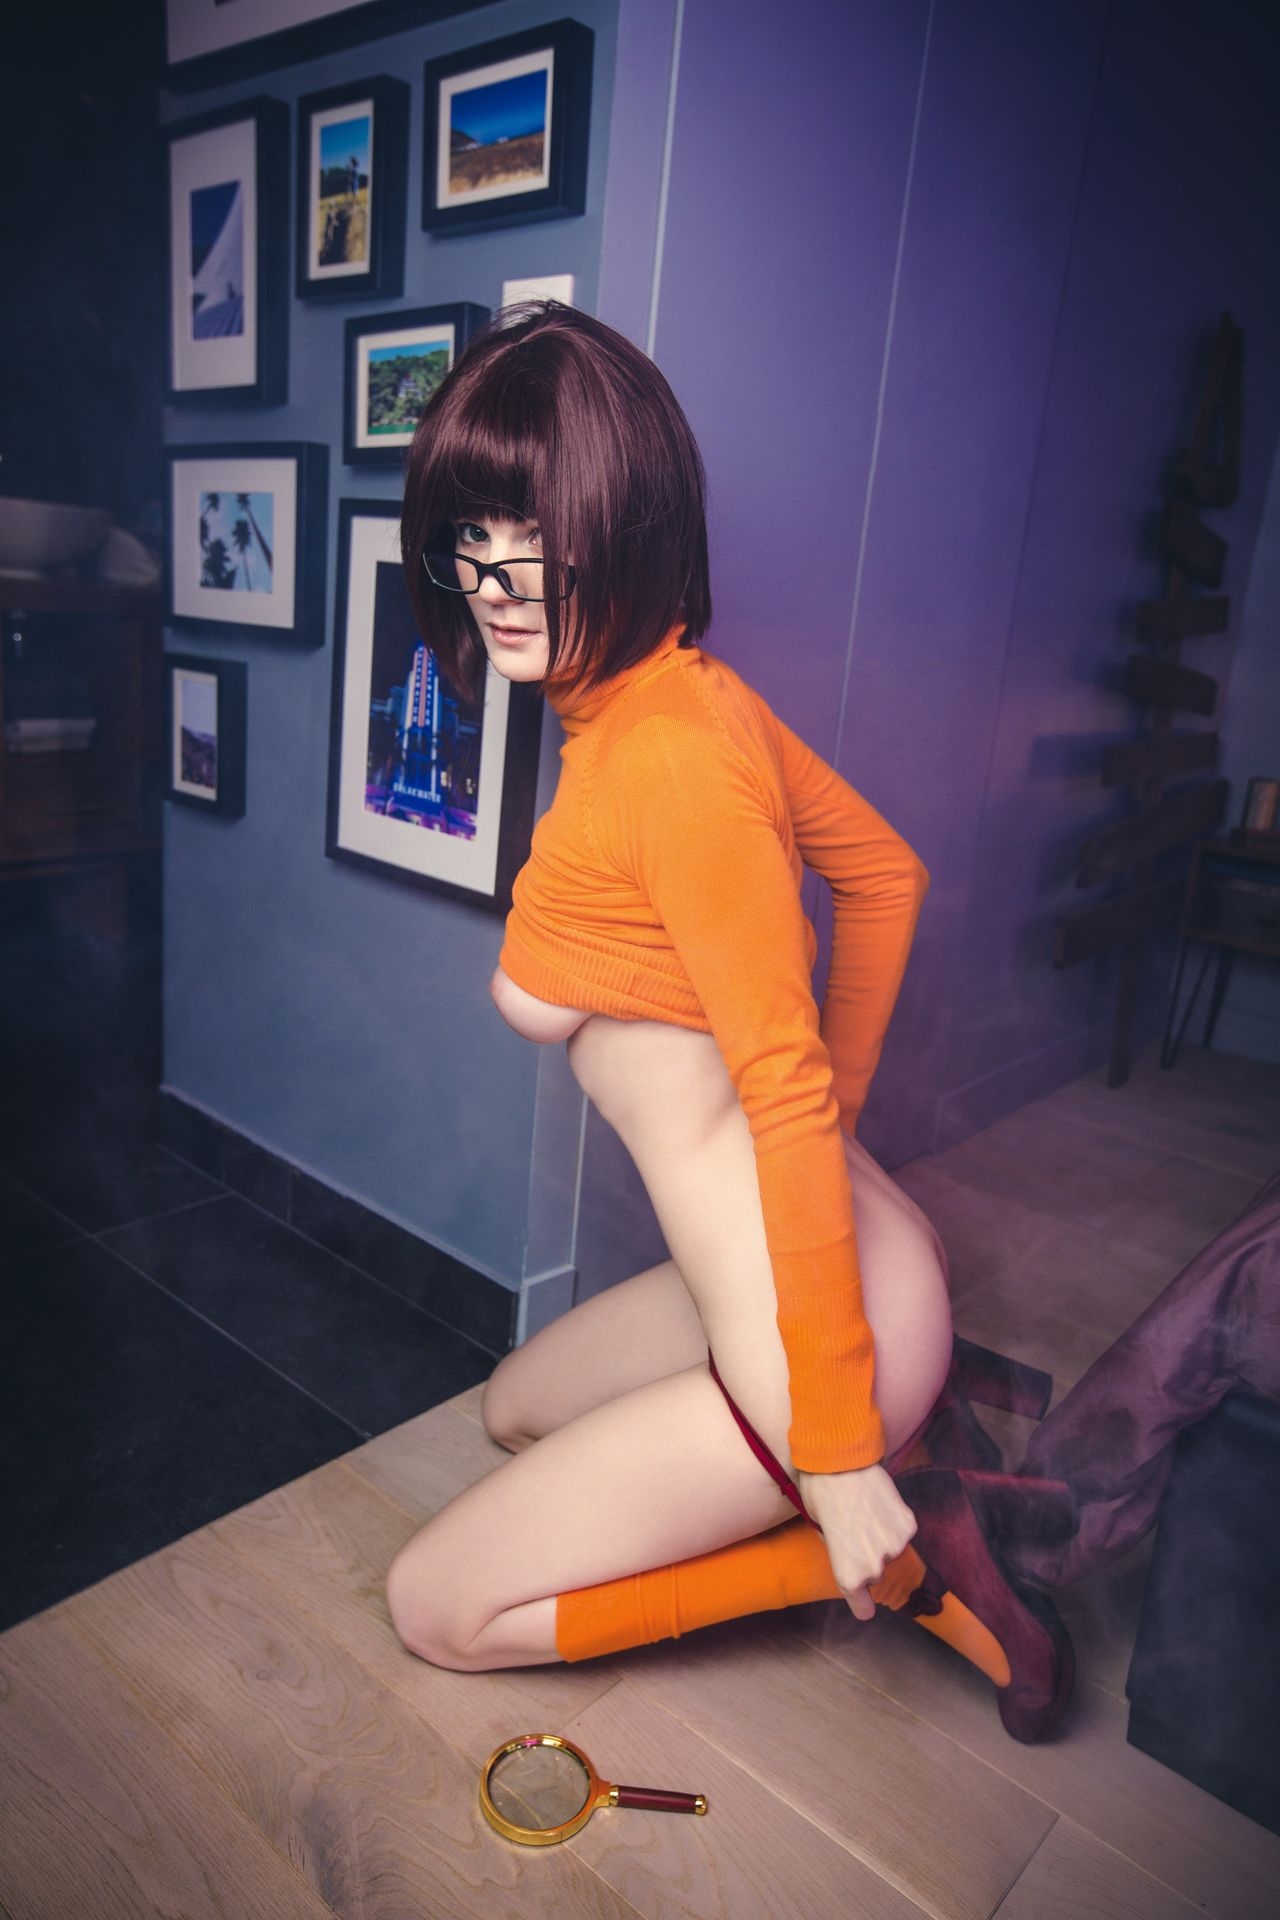 ShaeUnderscore - Velma Dinkley 64